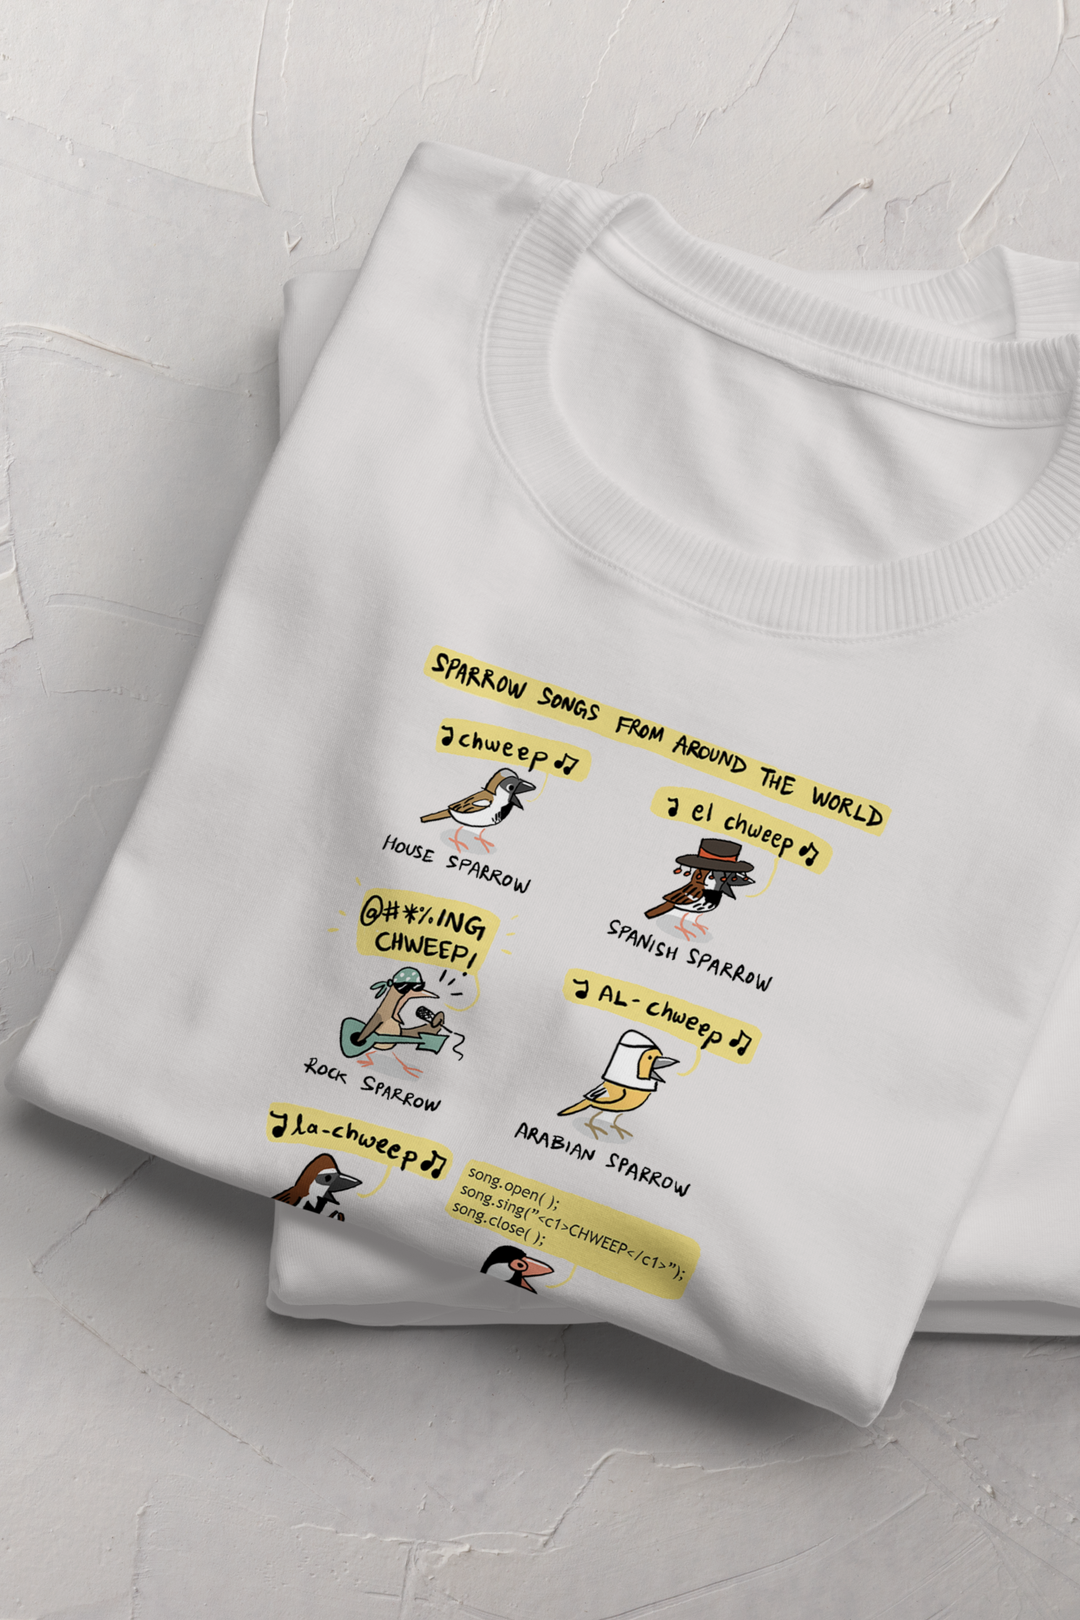 Sparrow Songs T-Shirt